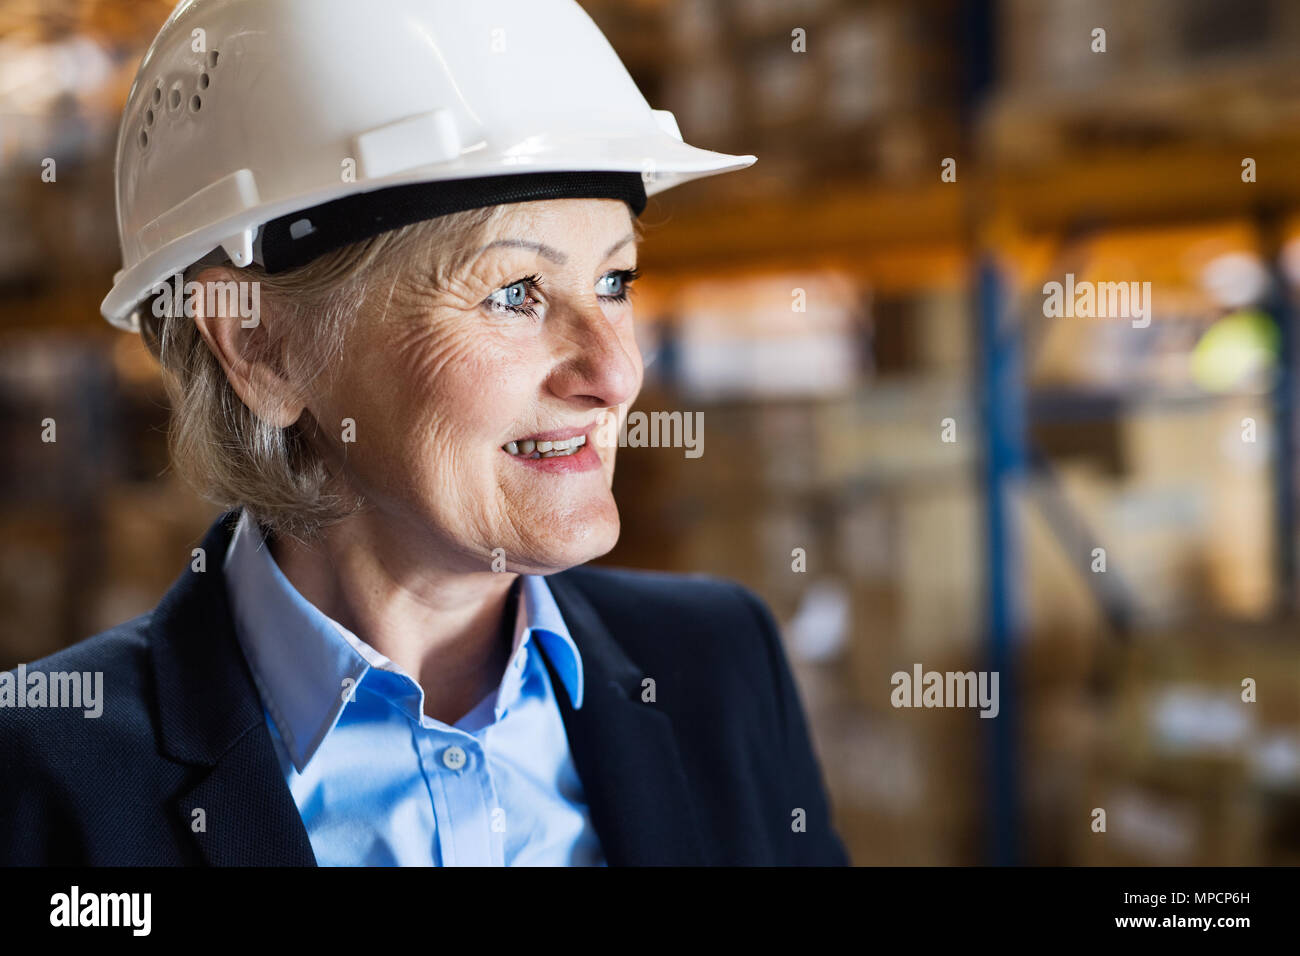 Senior woman warehouse manager or supervisor with white helmet. Stock Photo